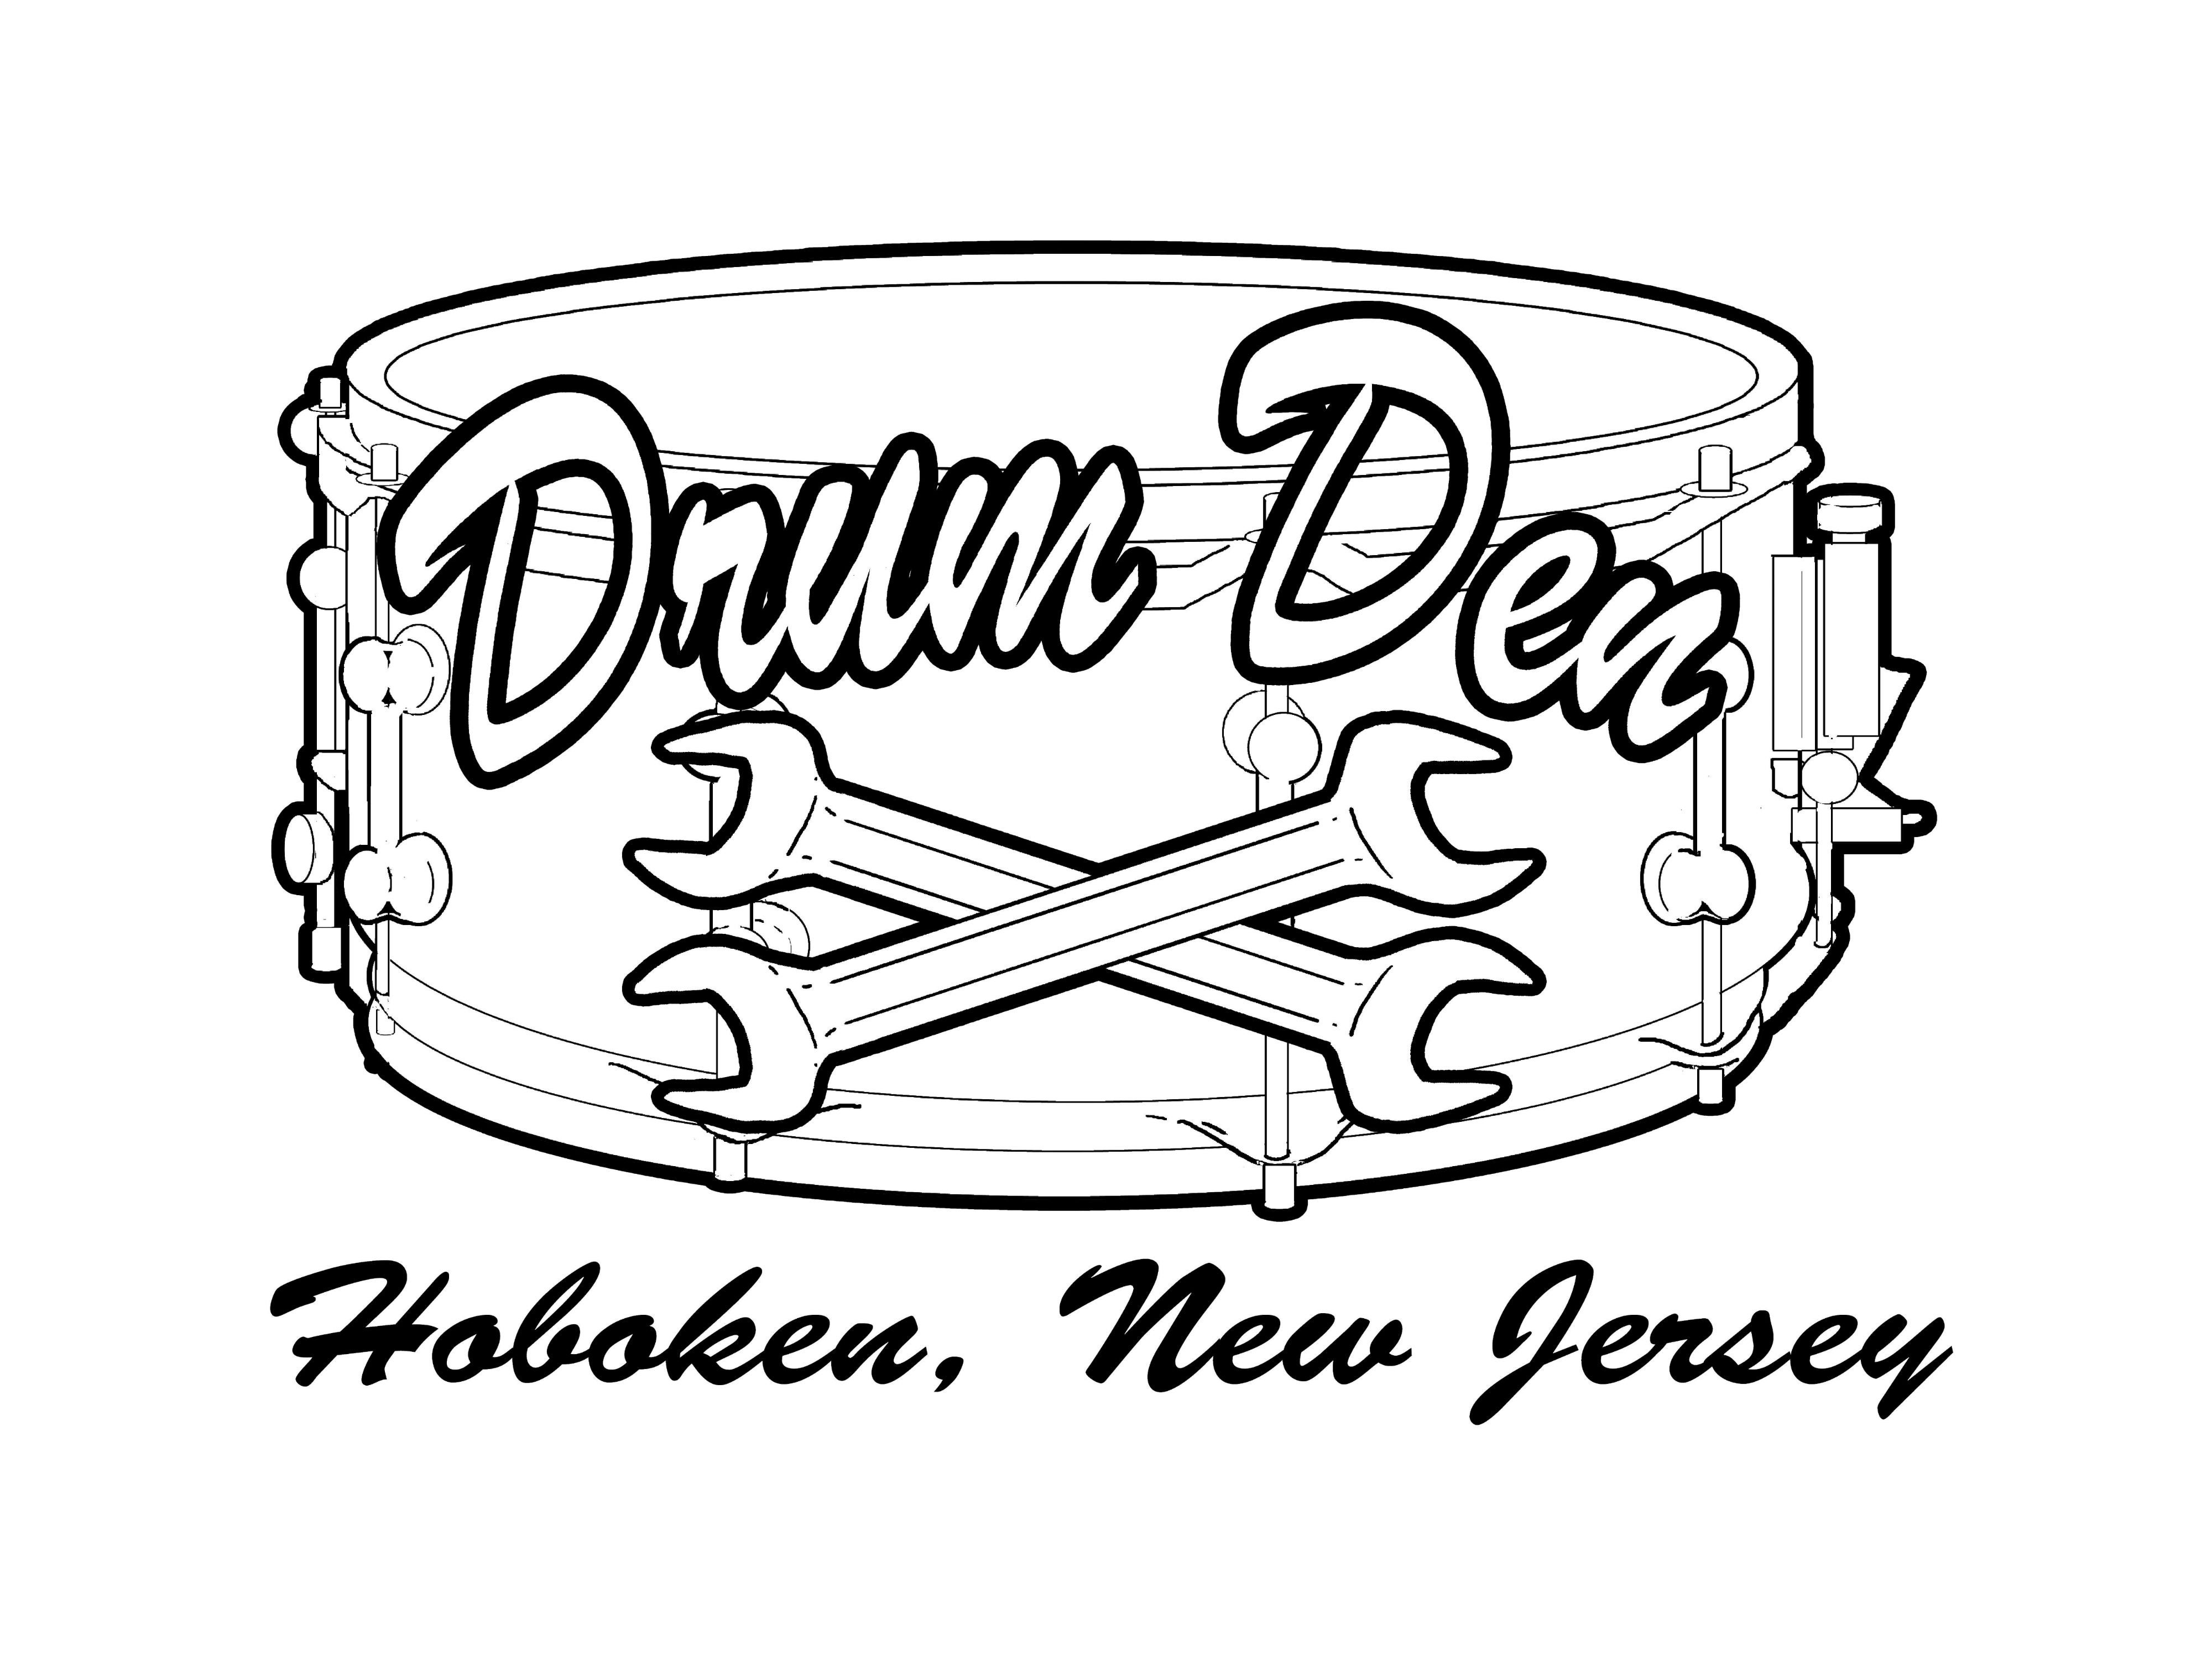 Stick Control | The Drum Den of Hoboken & Jersey City